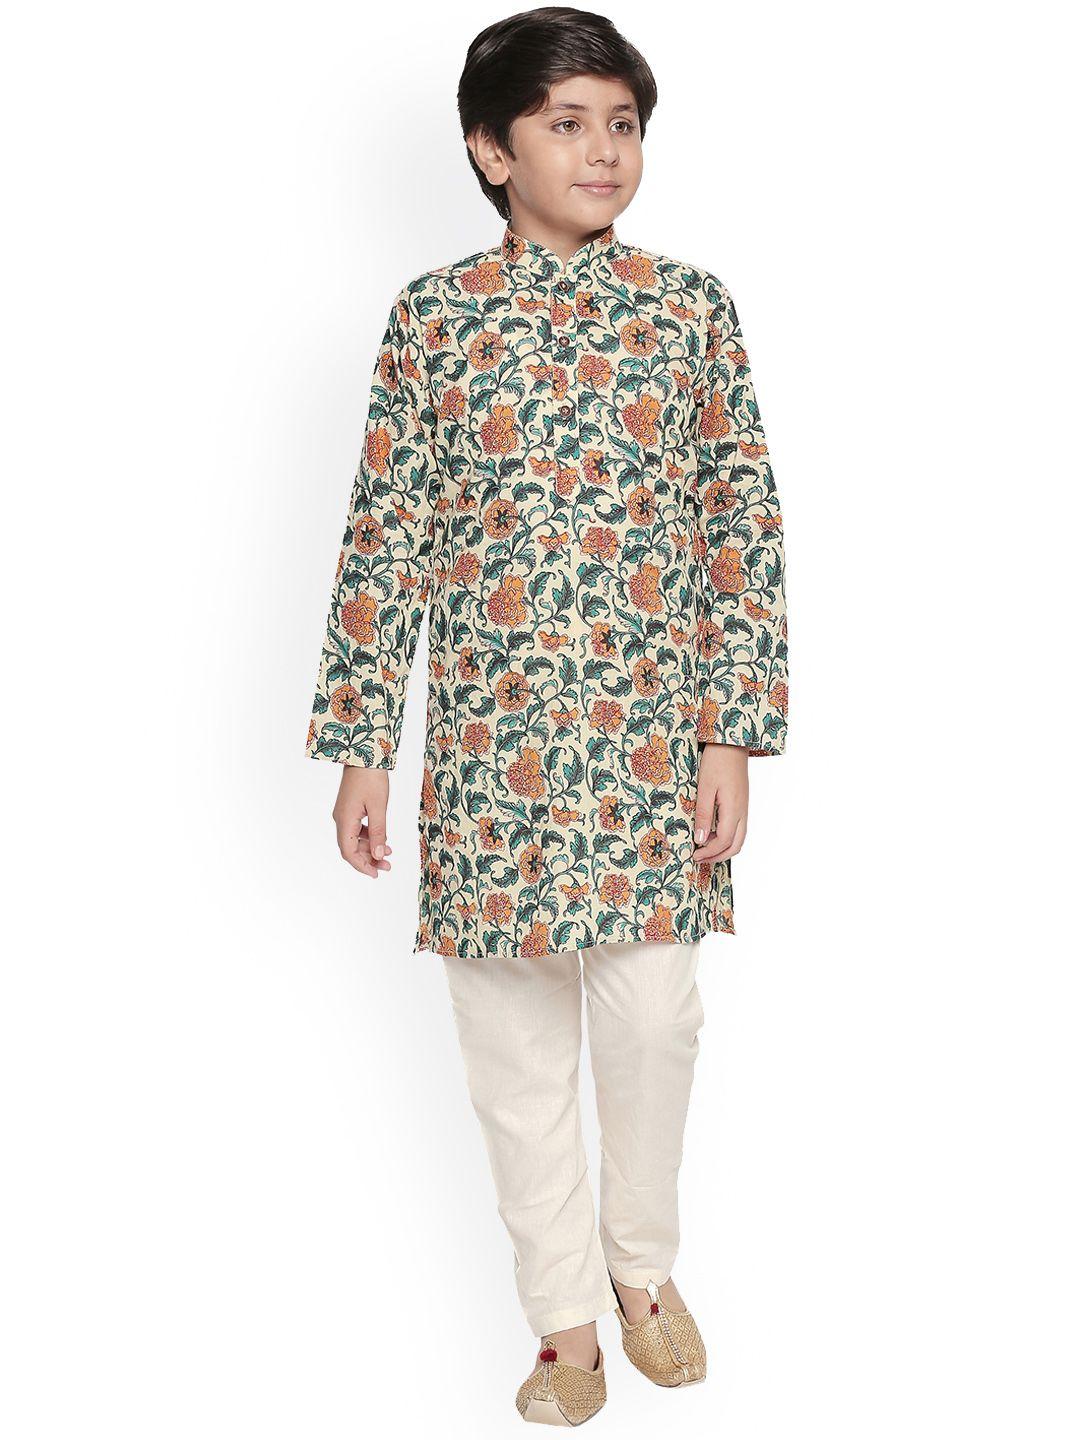 jeetethnics boys multicoloured & cream-coloured printed kurta with pyjamas